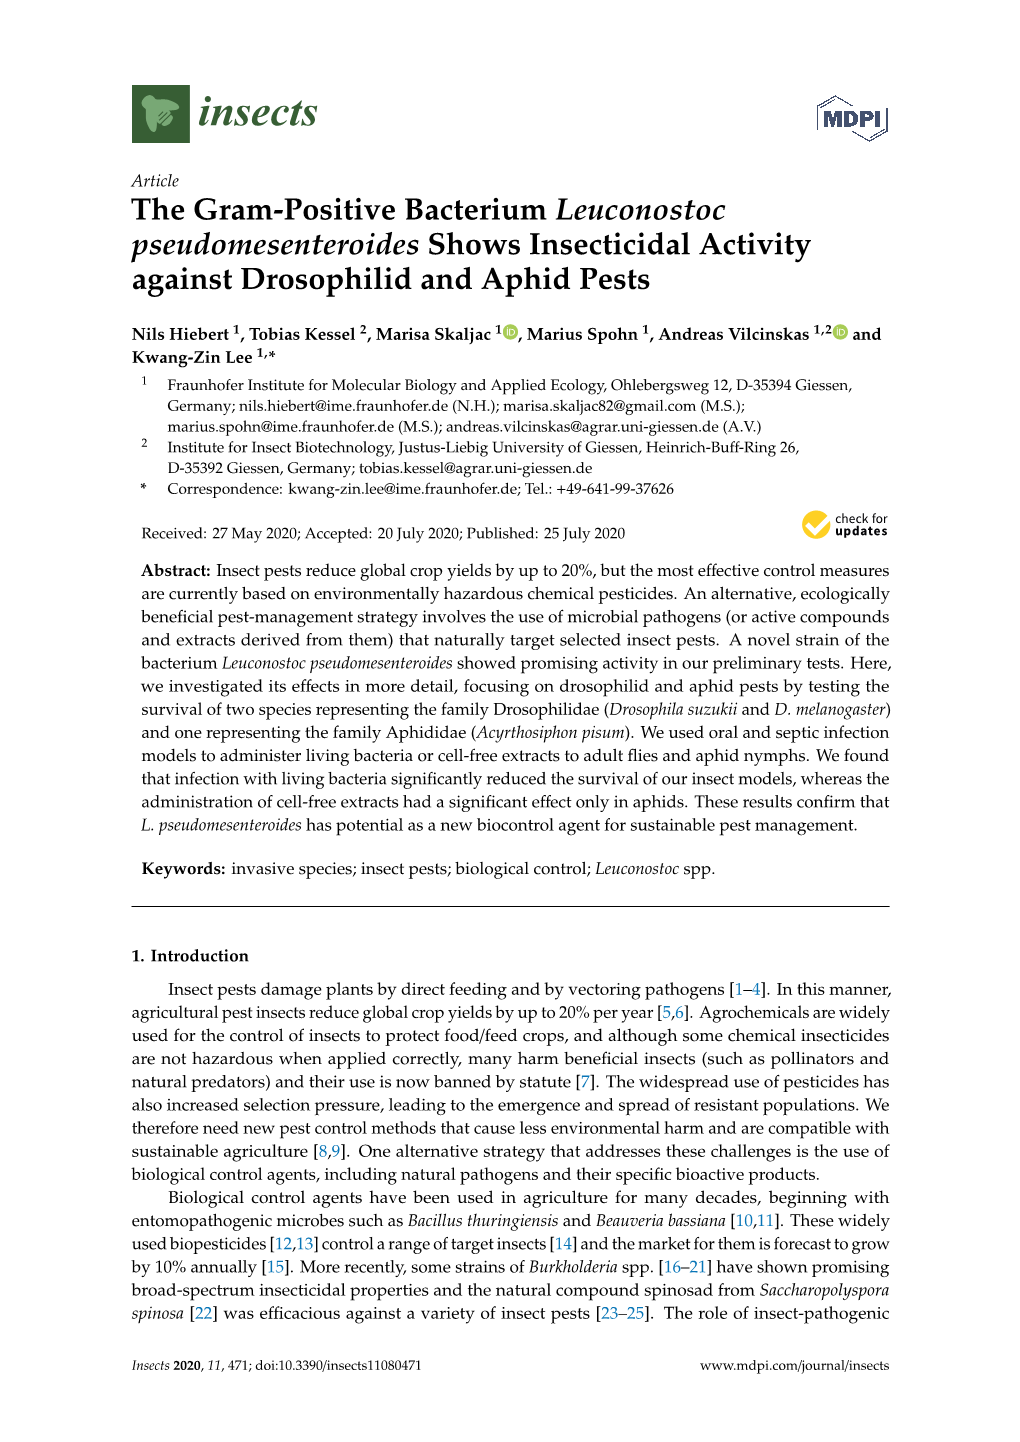 The Gram-Positive Bacterium Leuconostoc Pseudomesenteroides Shows Insecticidal Activity Against Drosophilid and Aphid Pests